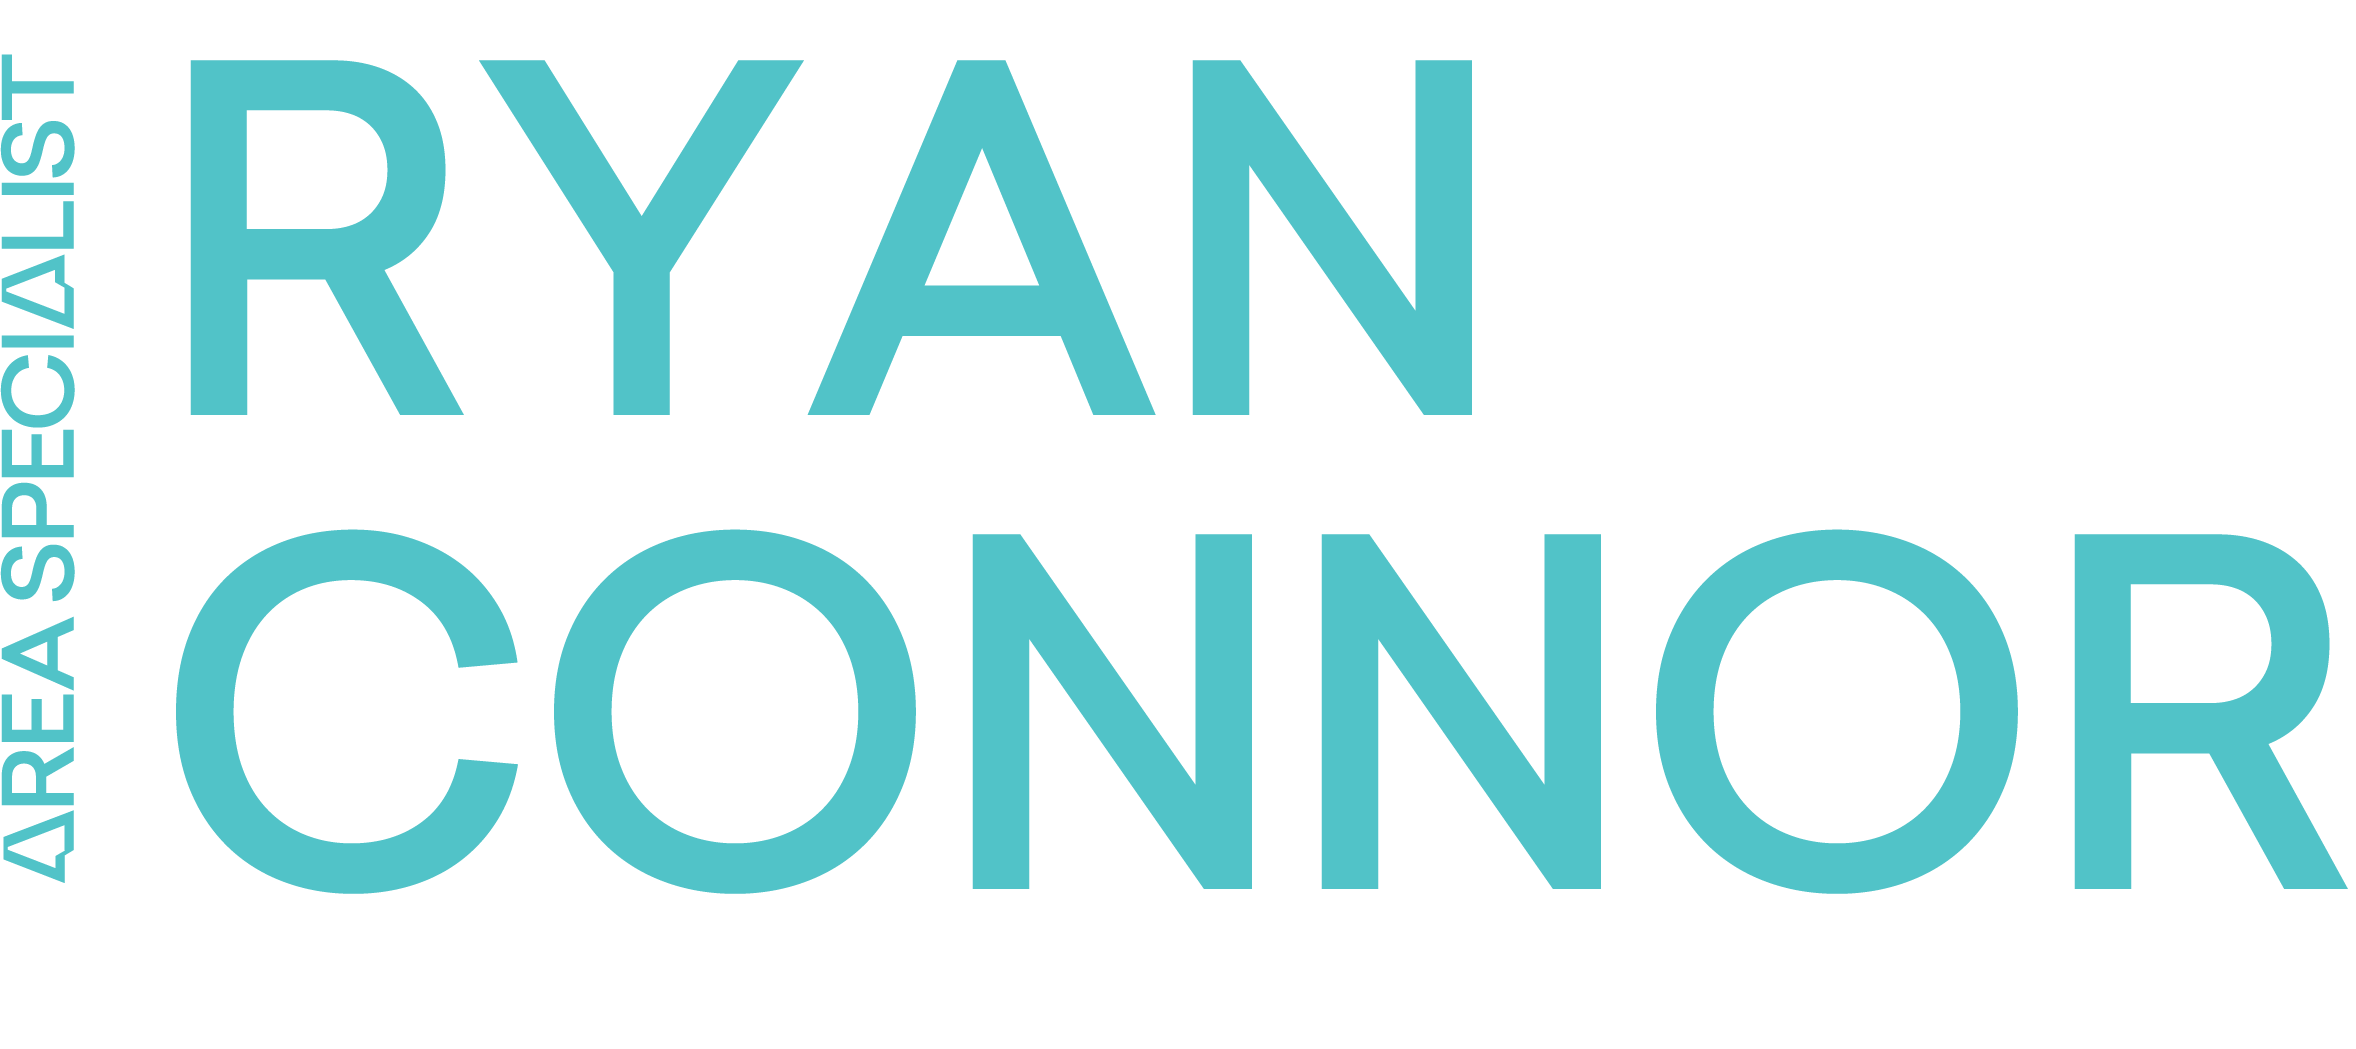 Ryan's logo